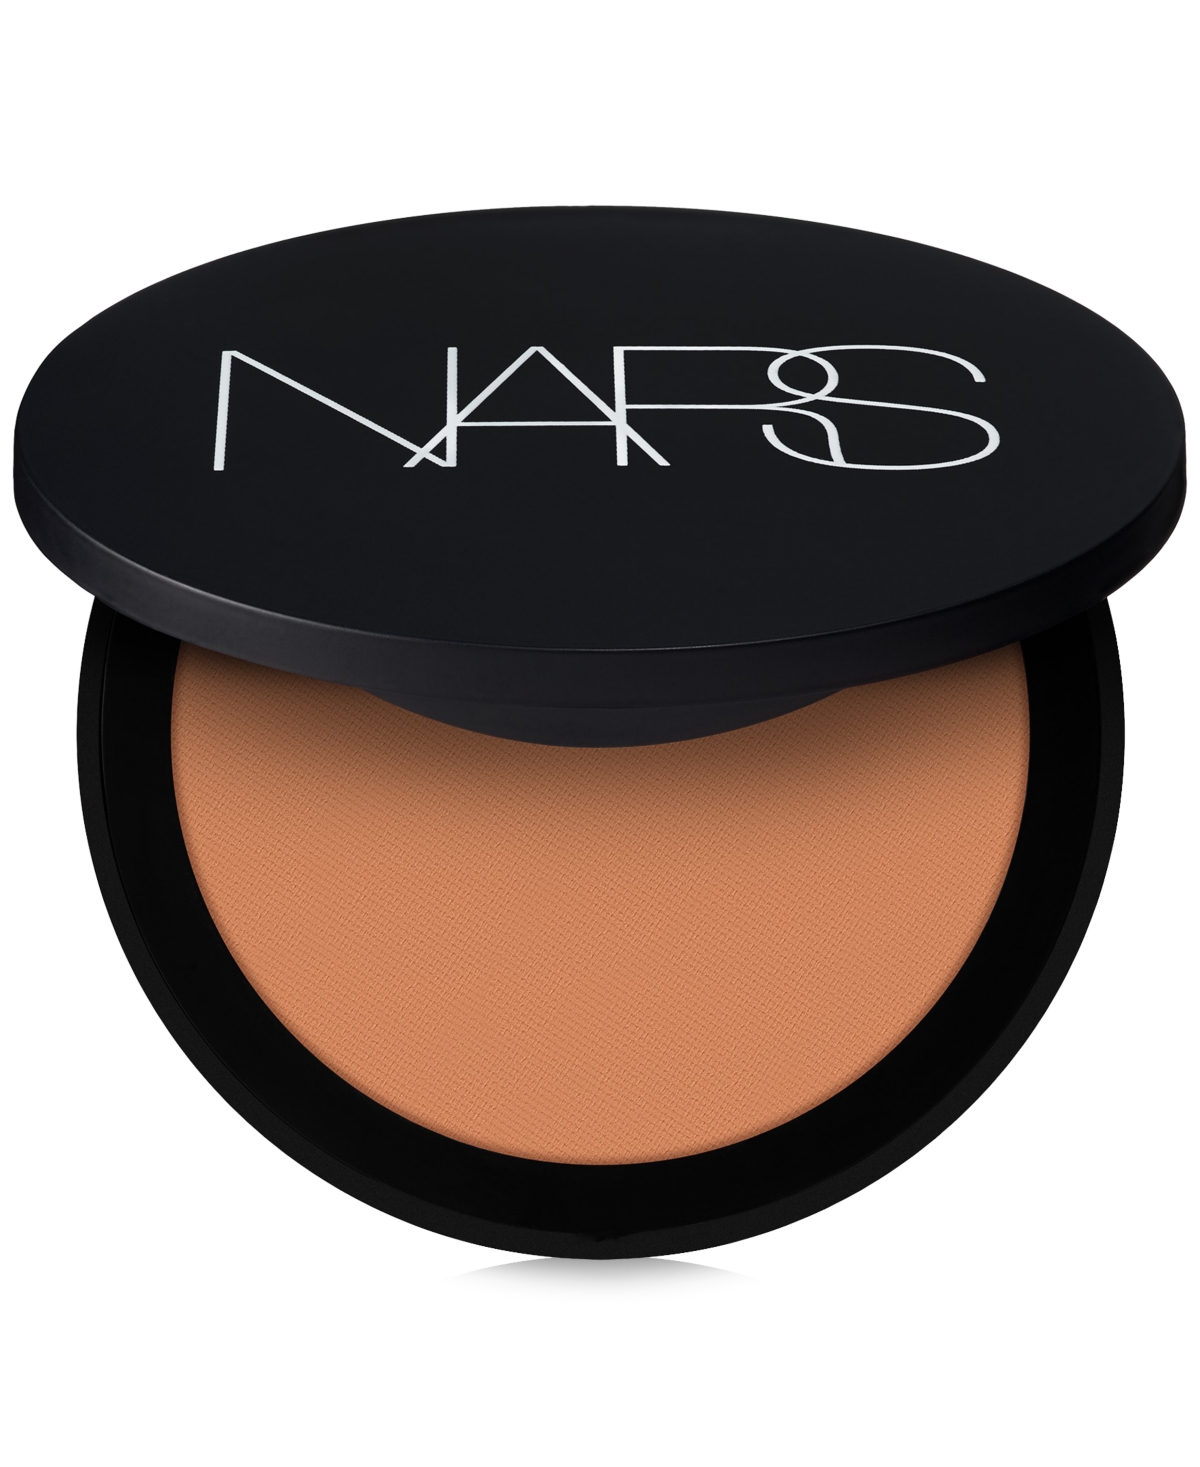 Nars Soft Matte Advanced Perfecting Powder - Offshore